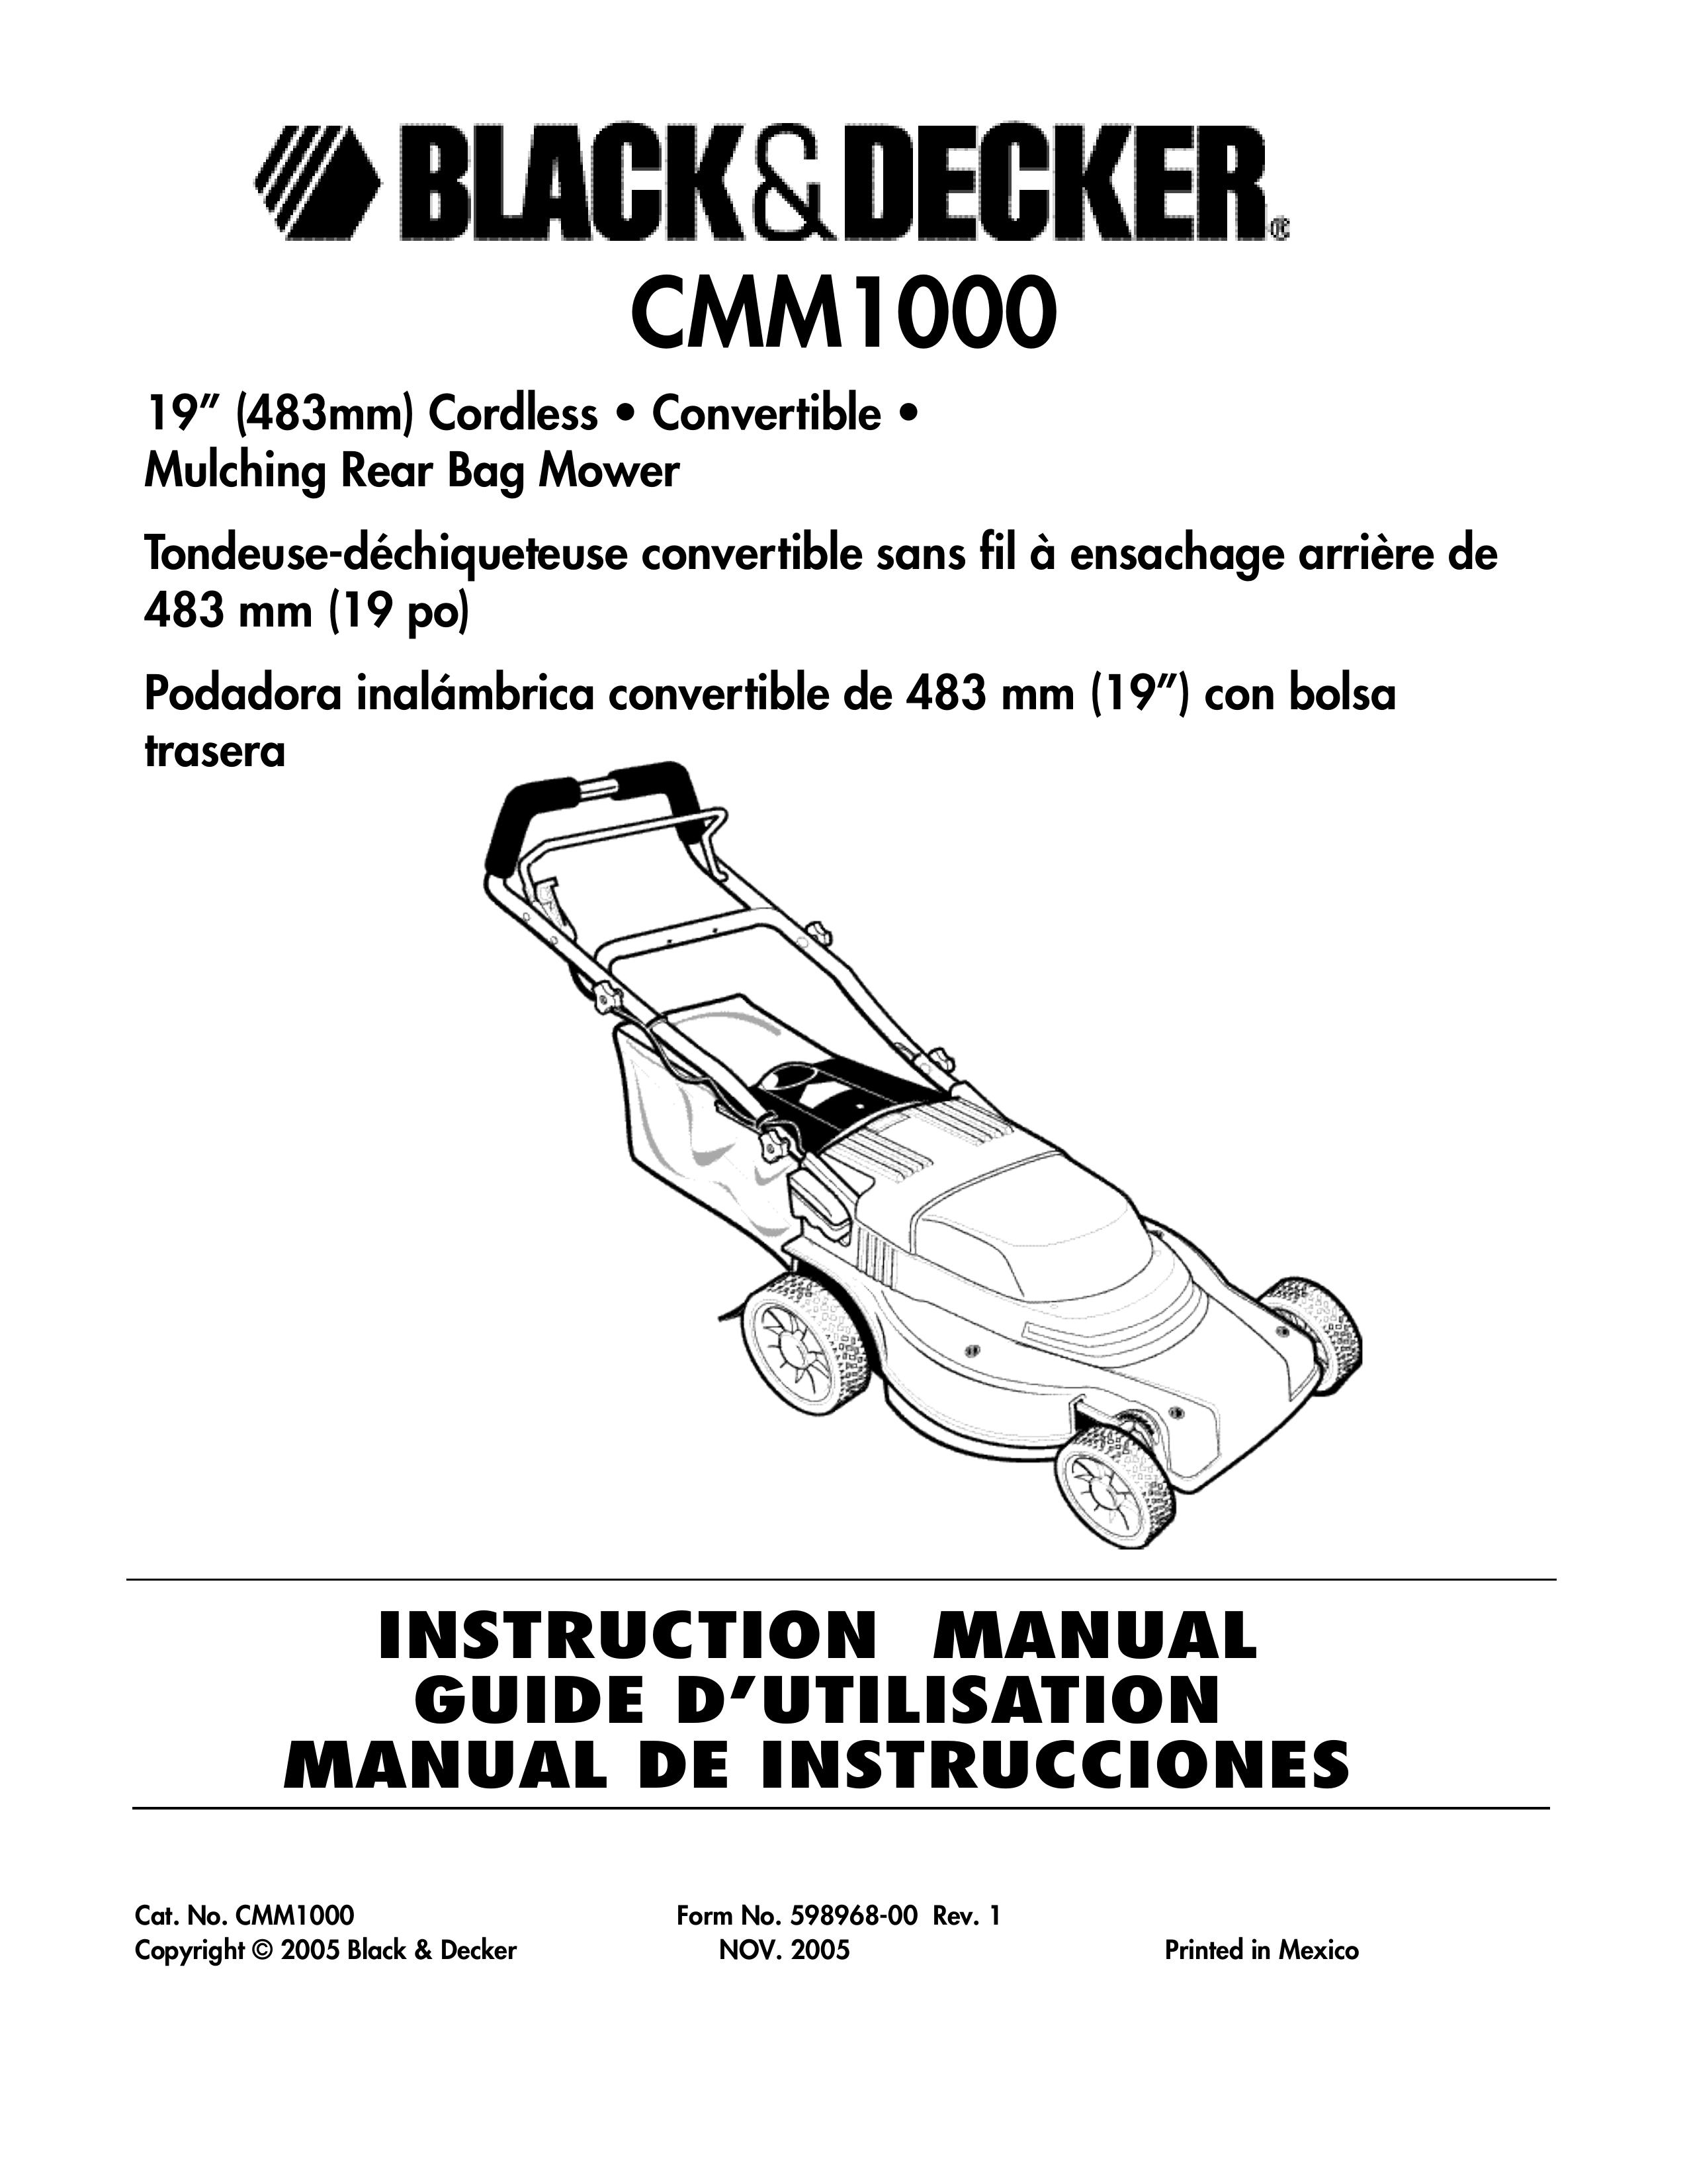 Black & Decker 598968-00 Lawn Mower User Manual